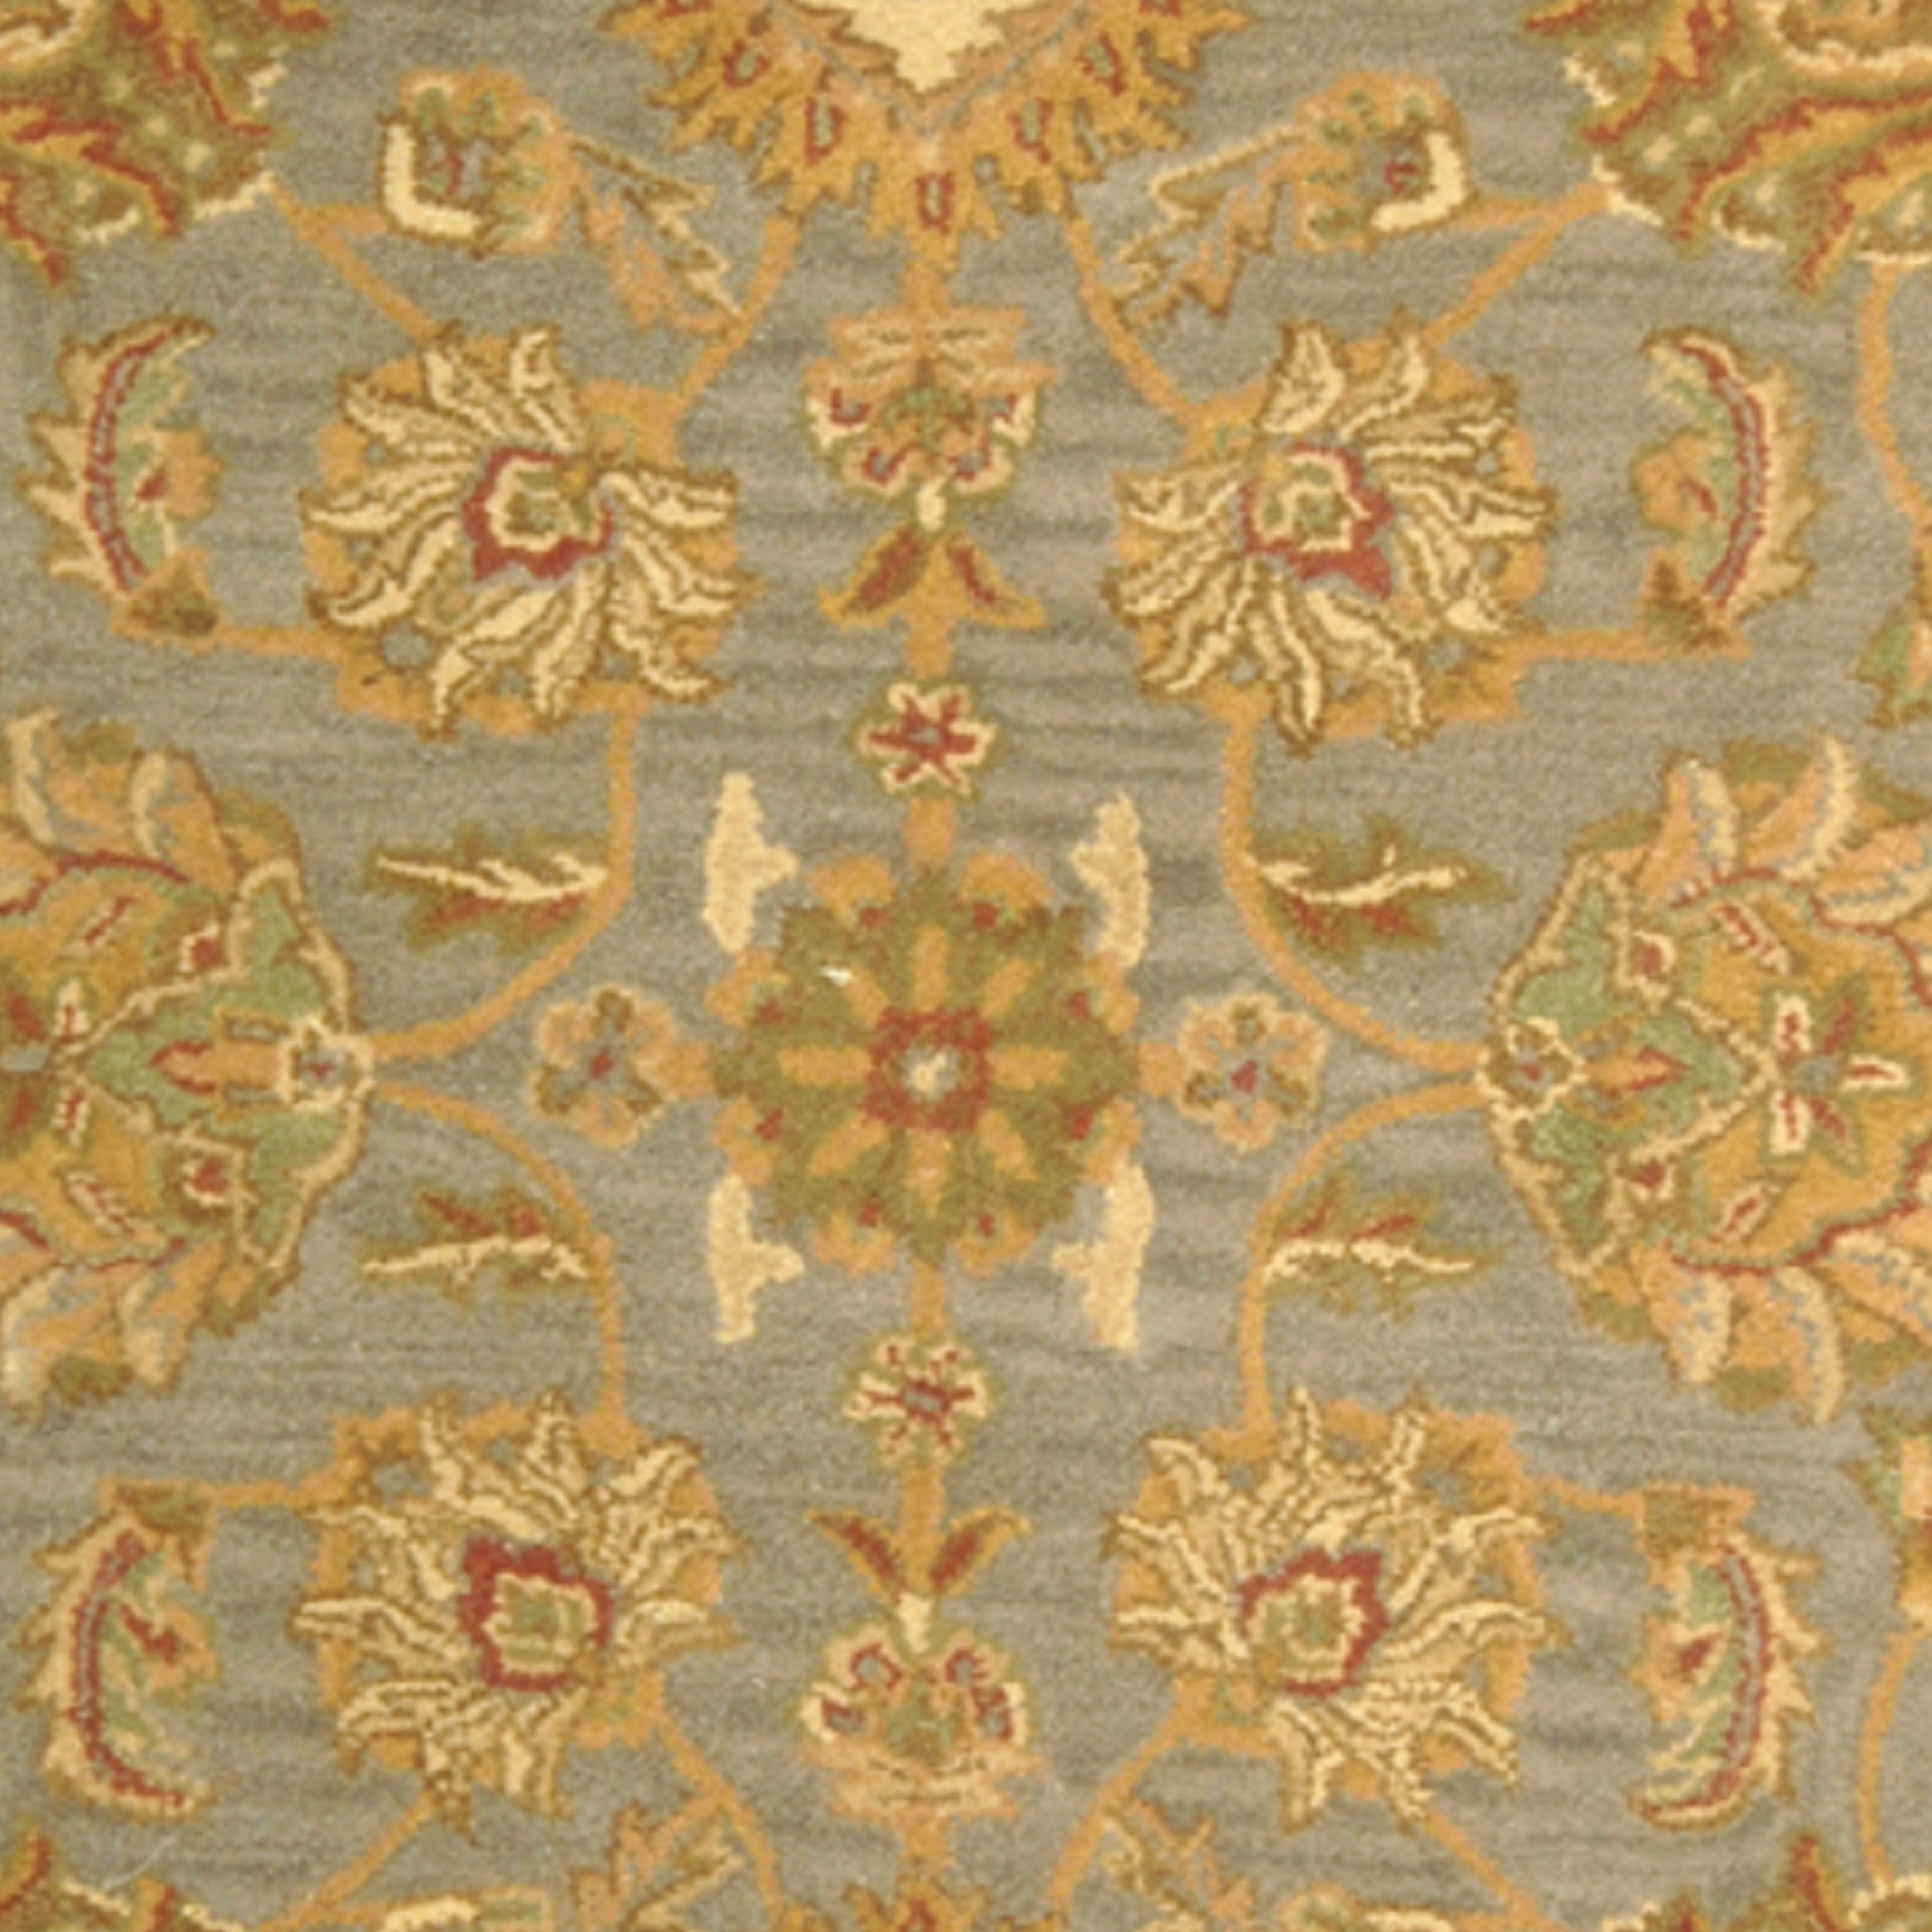 SAFAVIEH Heritage Regis Traditional Wool Area Rug, Blue/Beige, 8' x 8' Round - image 3 of 4